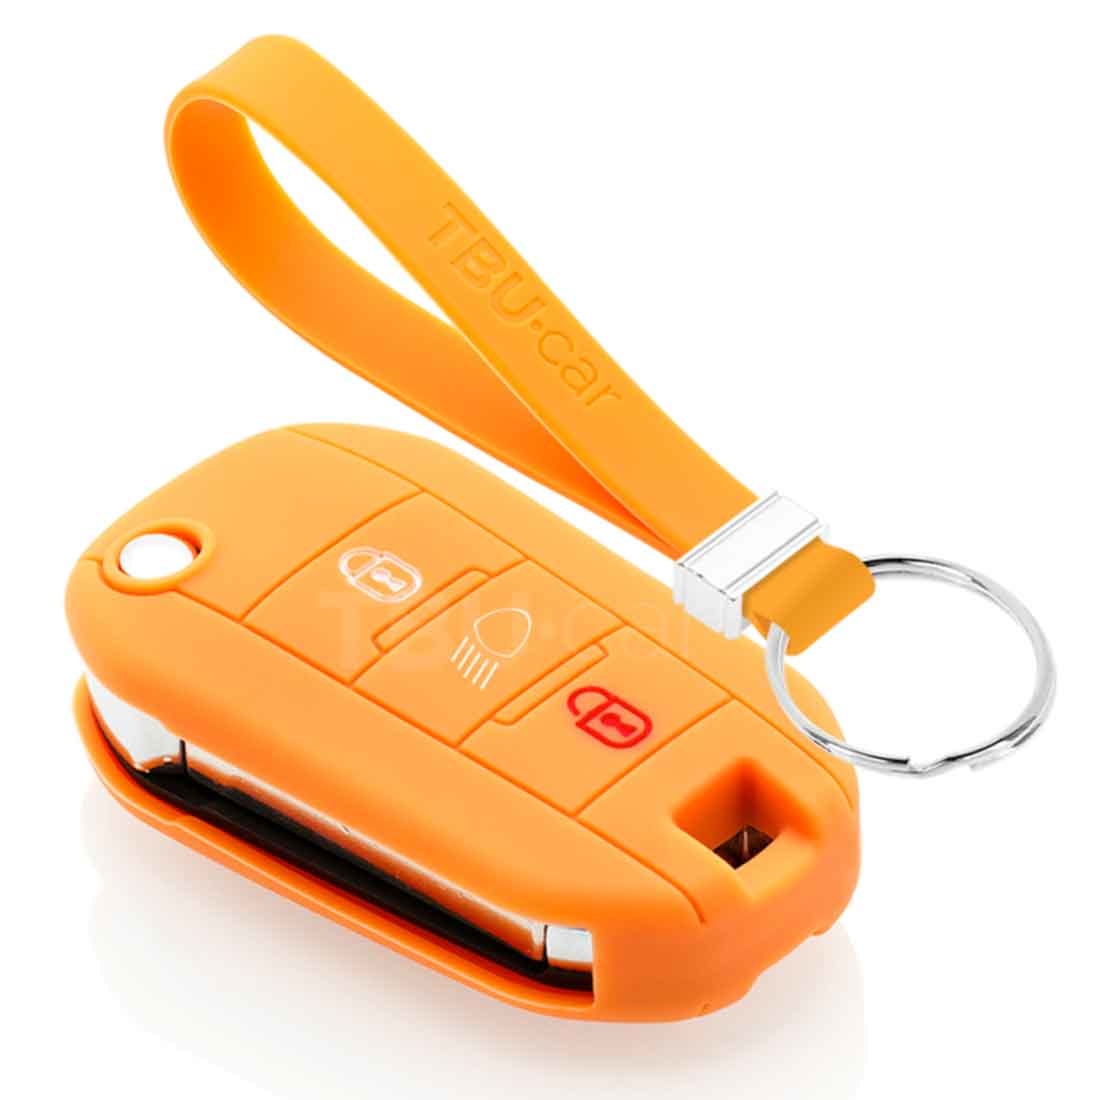 TBU car TBU car Sleutel cover compatibel met Citroën - Silicone sleutelhoesje - beschermhoesje autosleutel - Oranje